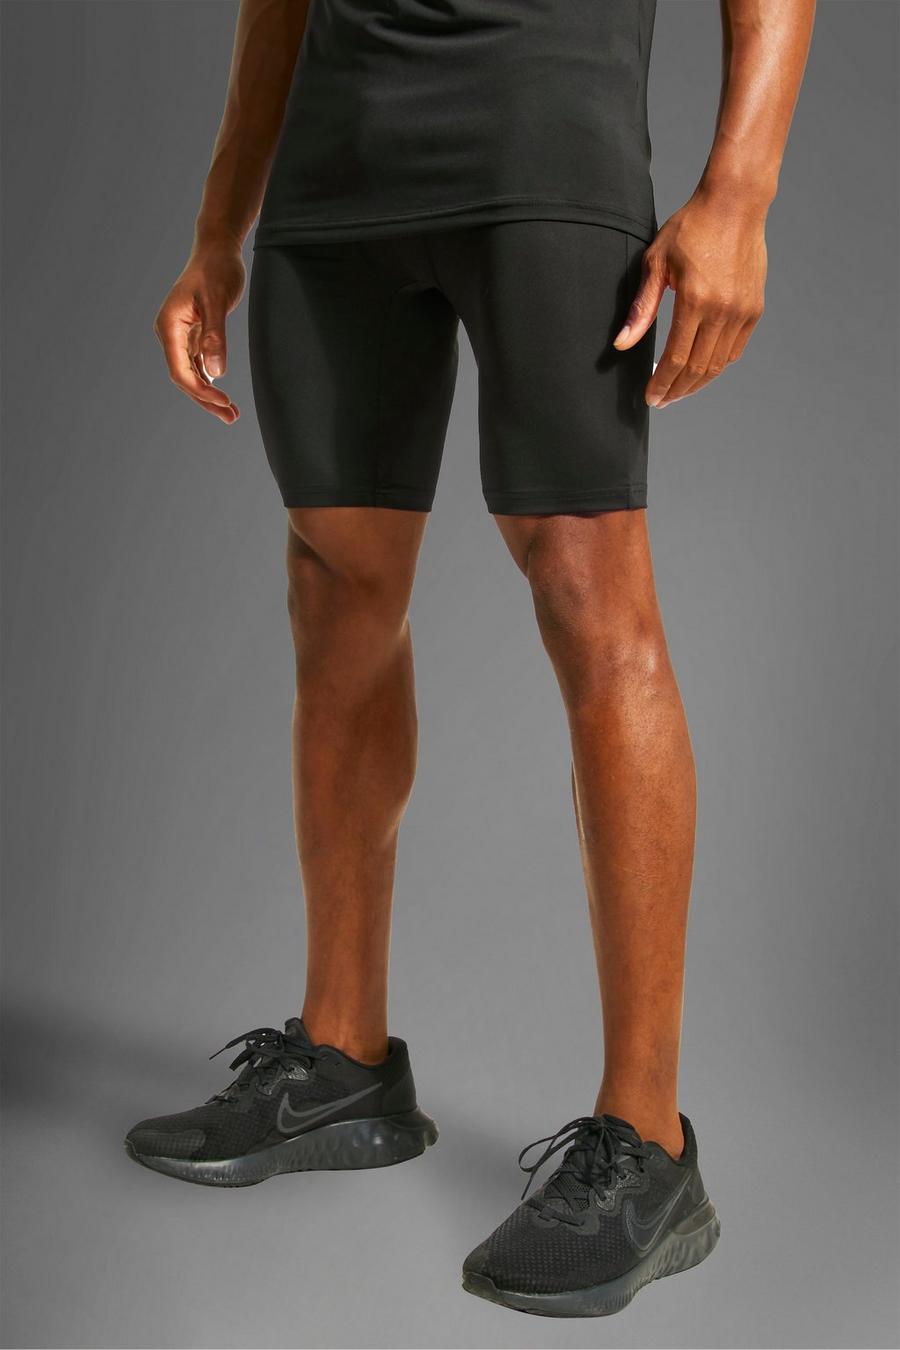 Pantaloncini Man Active per alta performance Active a compressione, Black negro image number 1